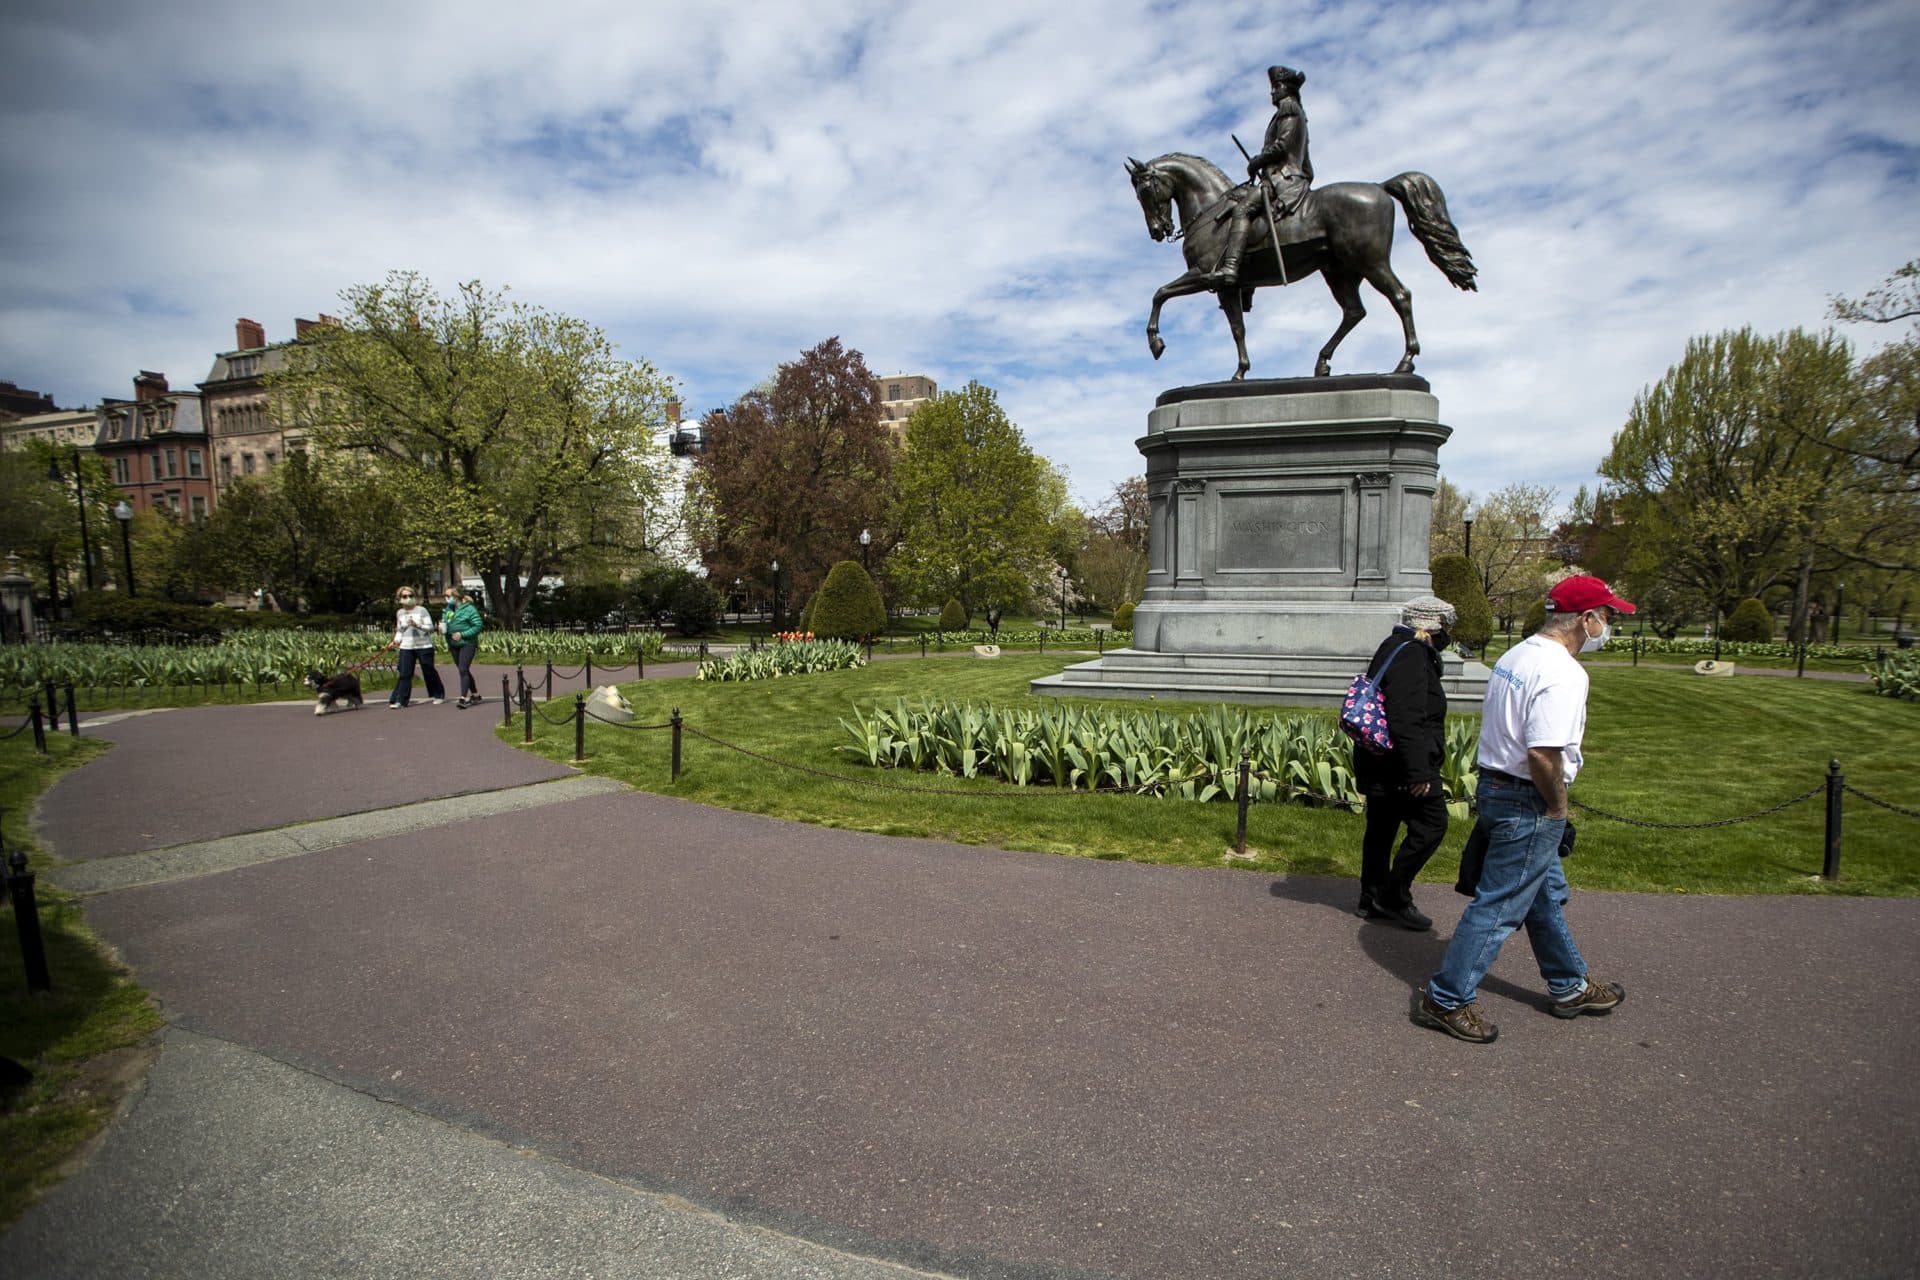 People walk around the statue of George Washington in the Boston Public Garden. (Jesse Costa/WBUR)